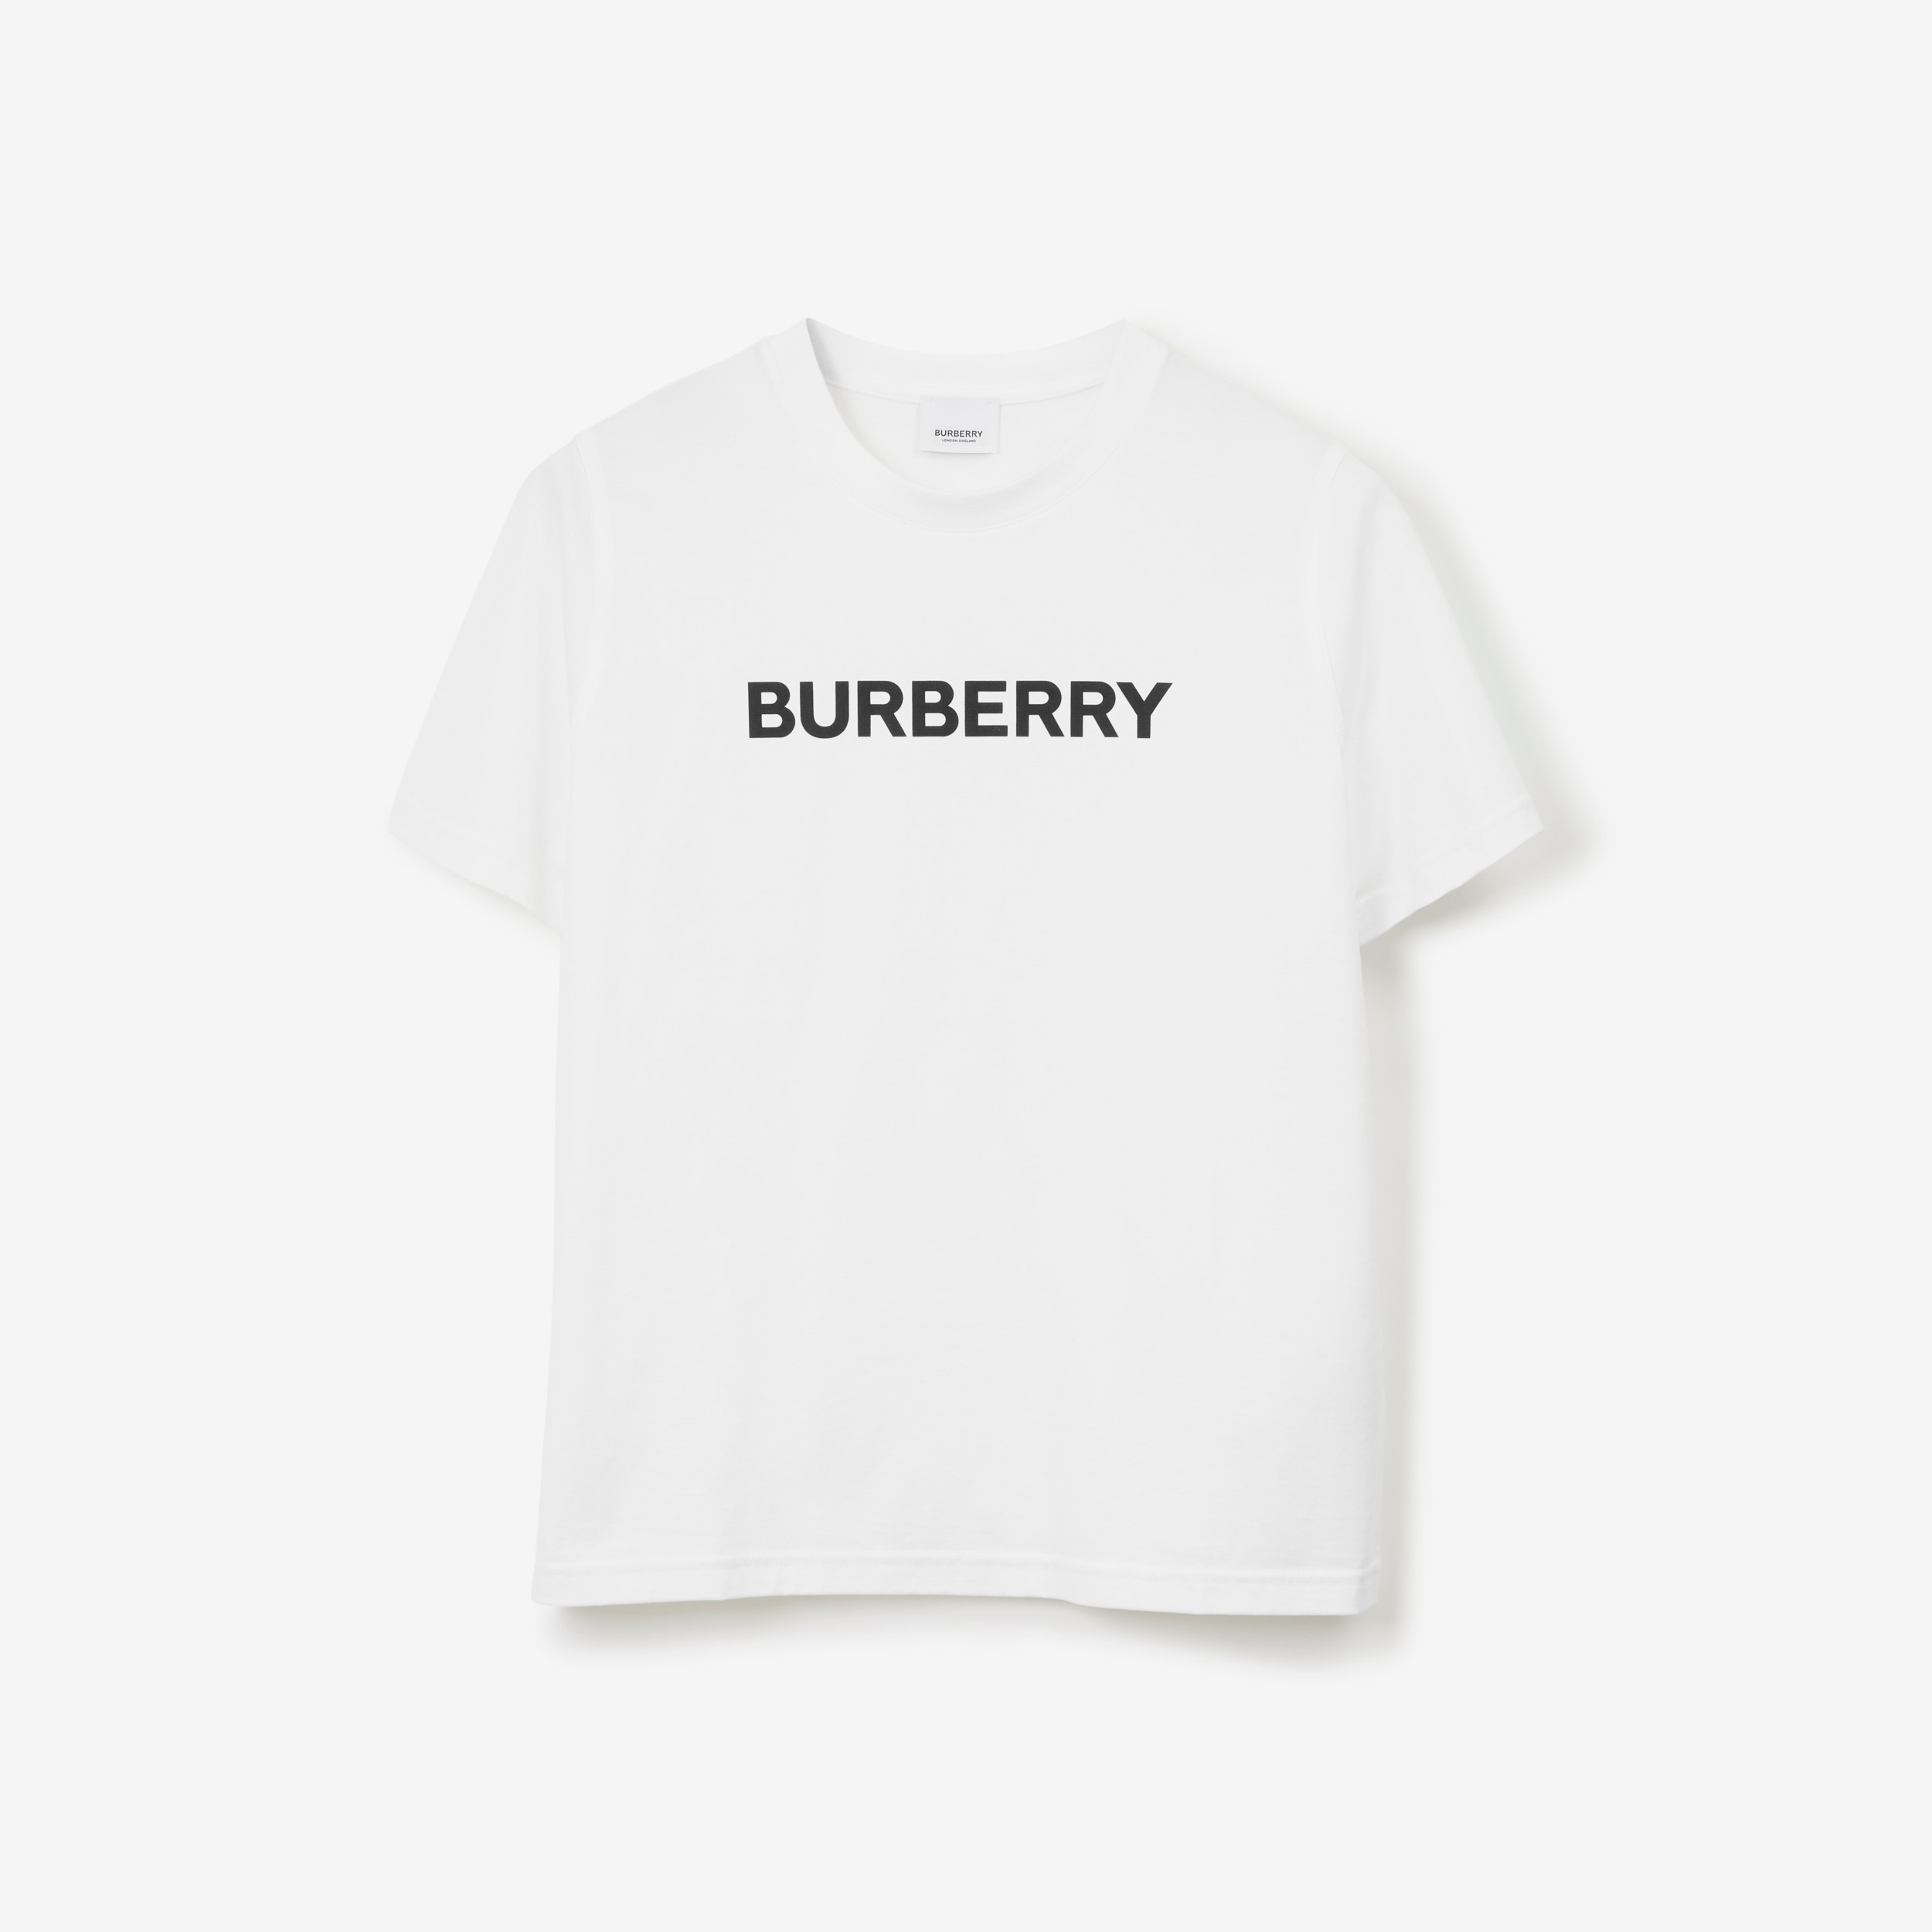 Arriba 97+ imagen camiseta burberry